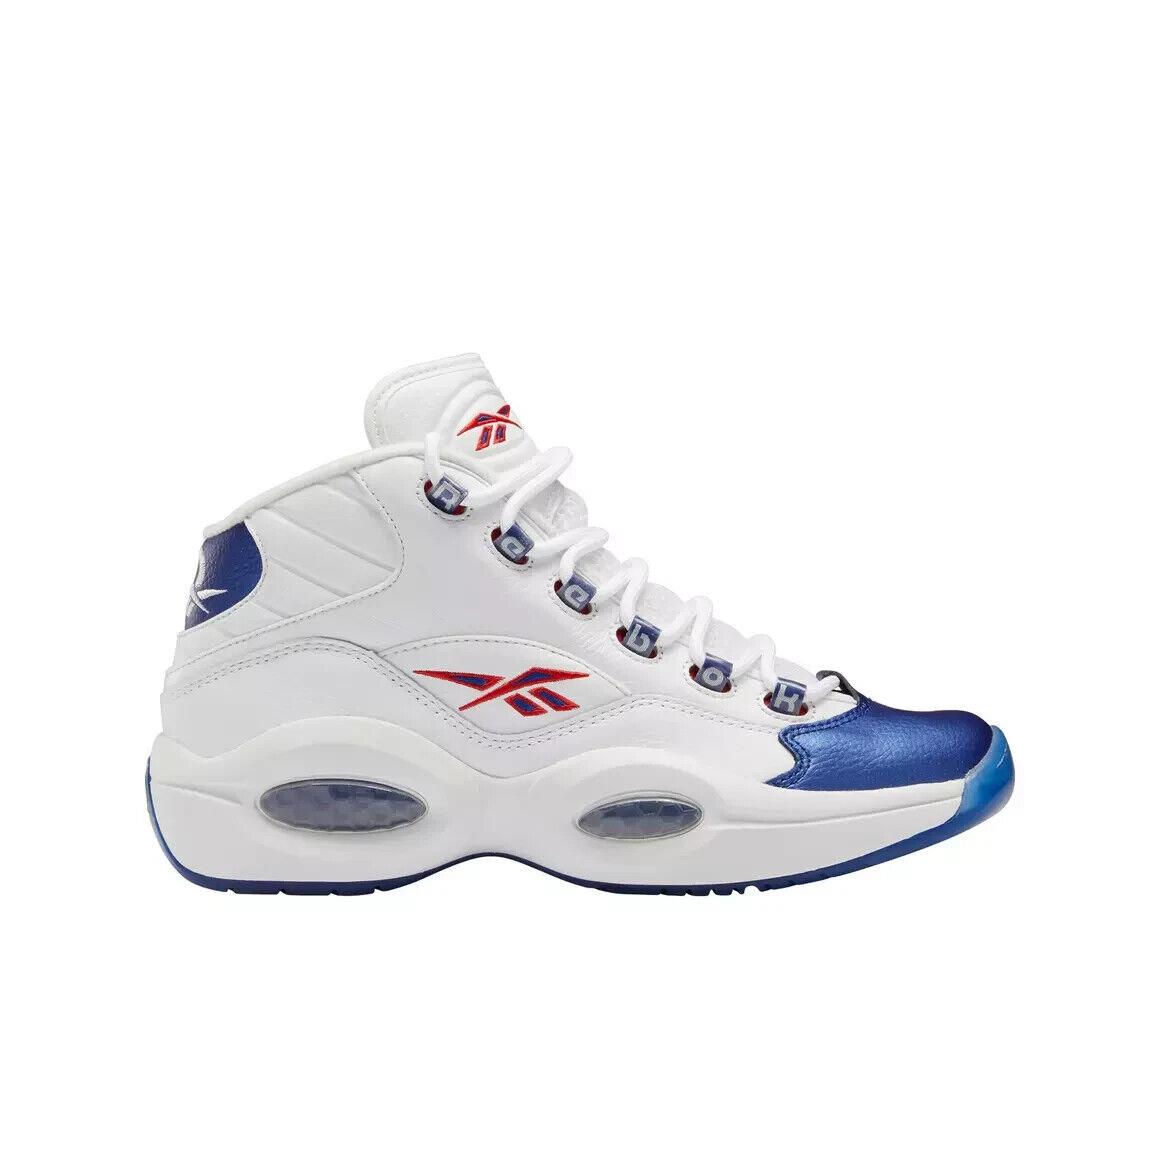 Mens Reebok Question Mid Basketball Shoes Size 7.5 White Blue GX0227 Iverson